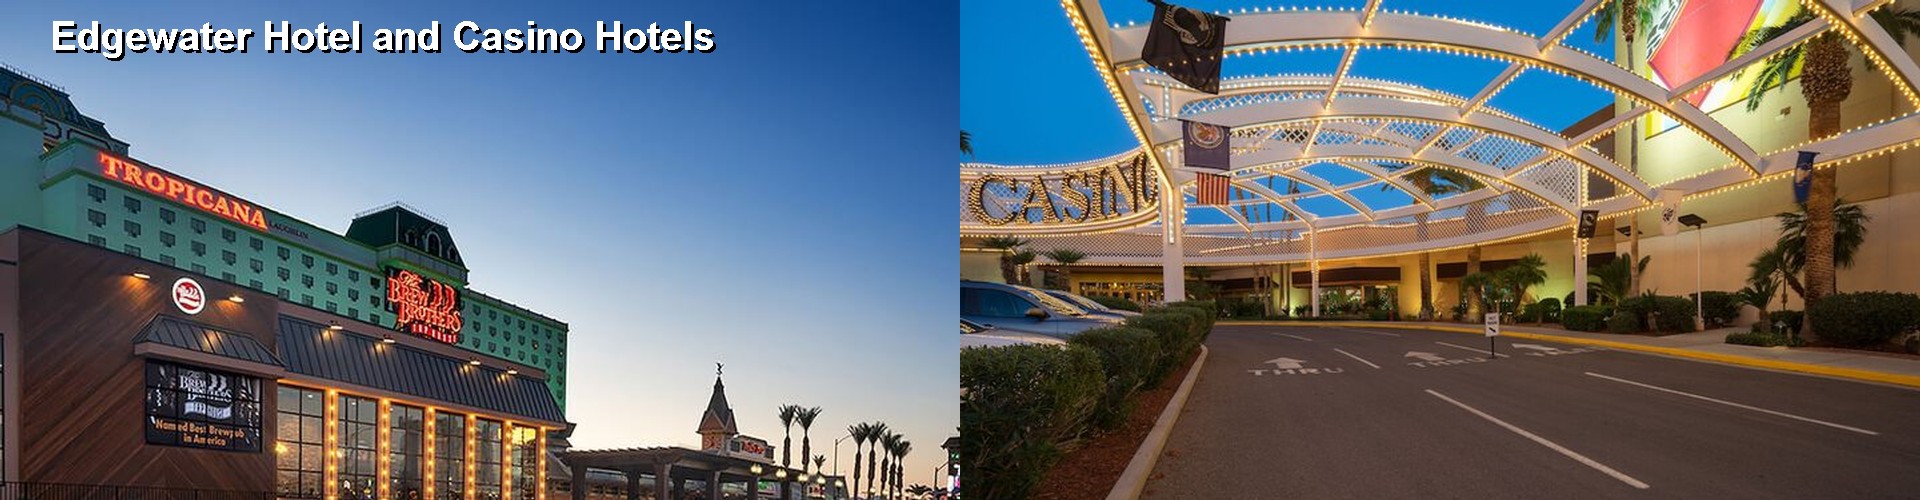 4 Best Hotels near Edgewater Hotel and Casino